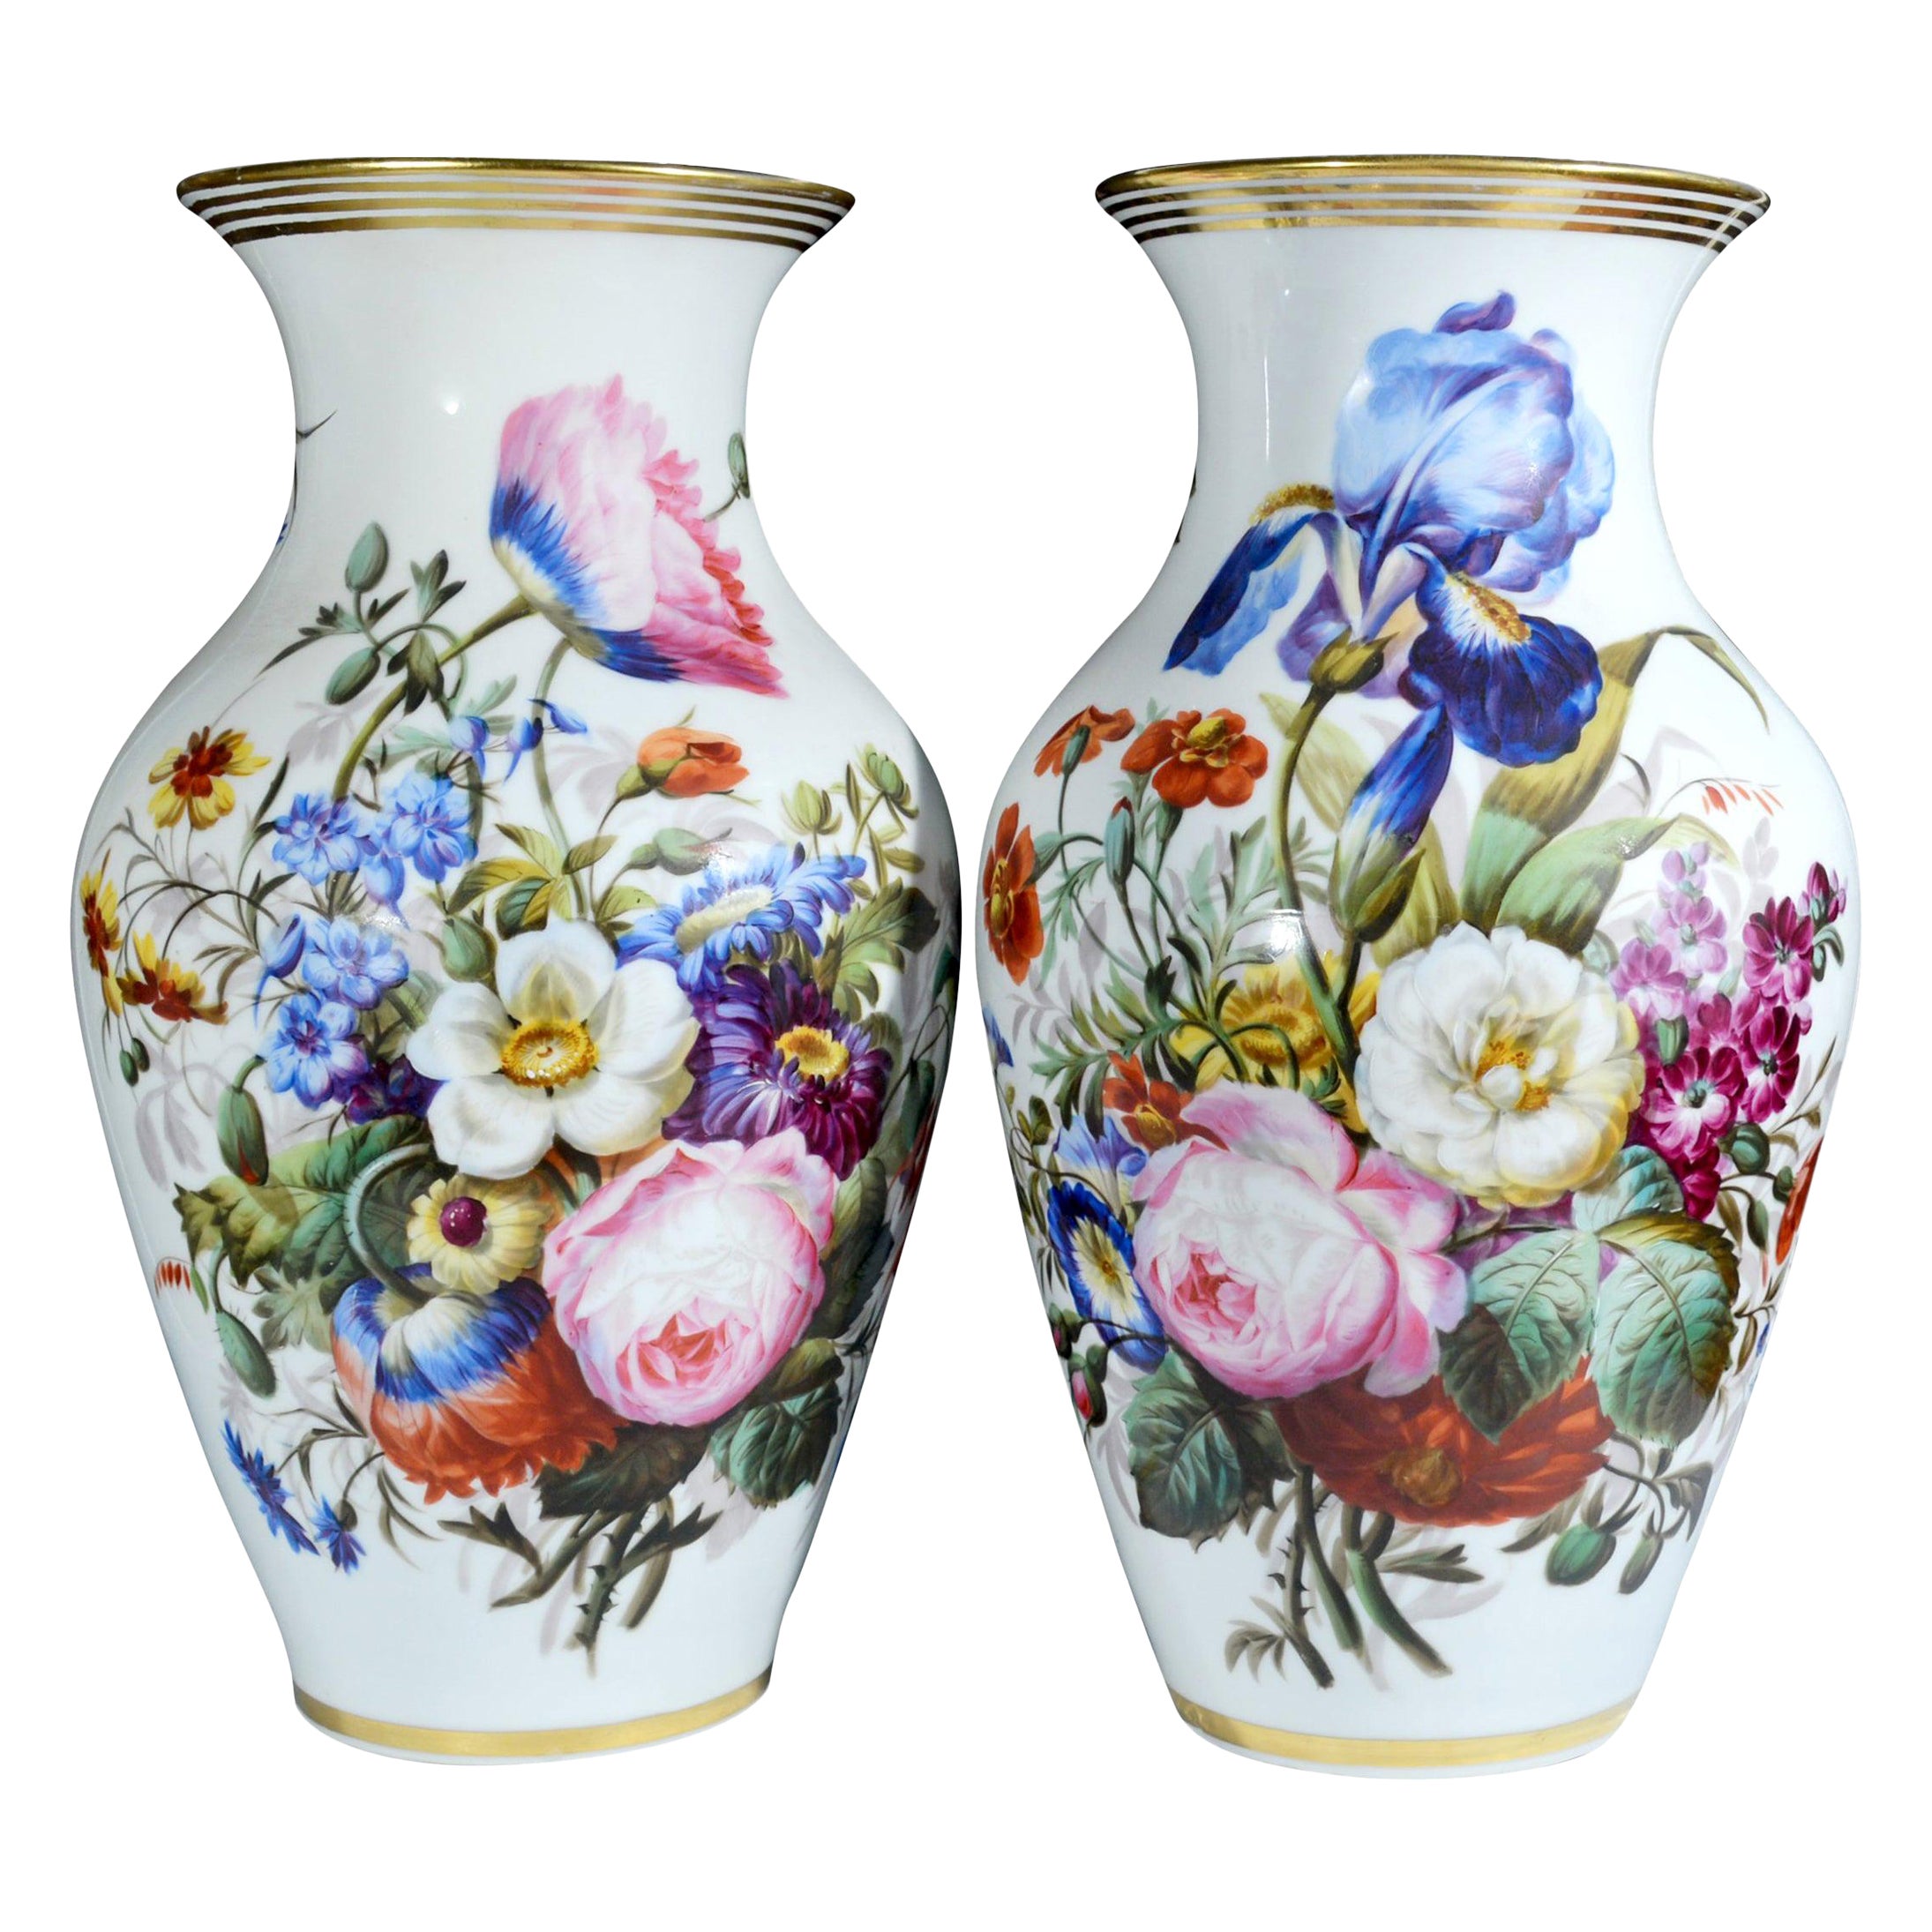 Paris Porcelain Botanical Vases, French, Mid-19th Century For Sale